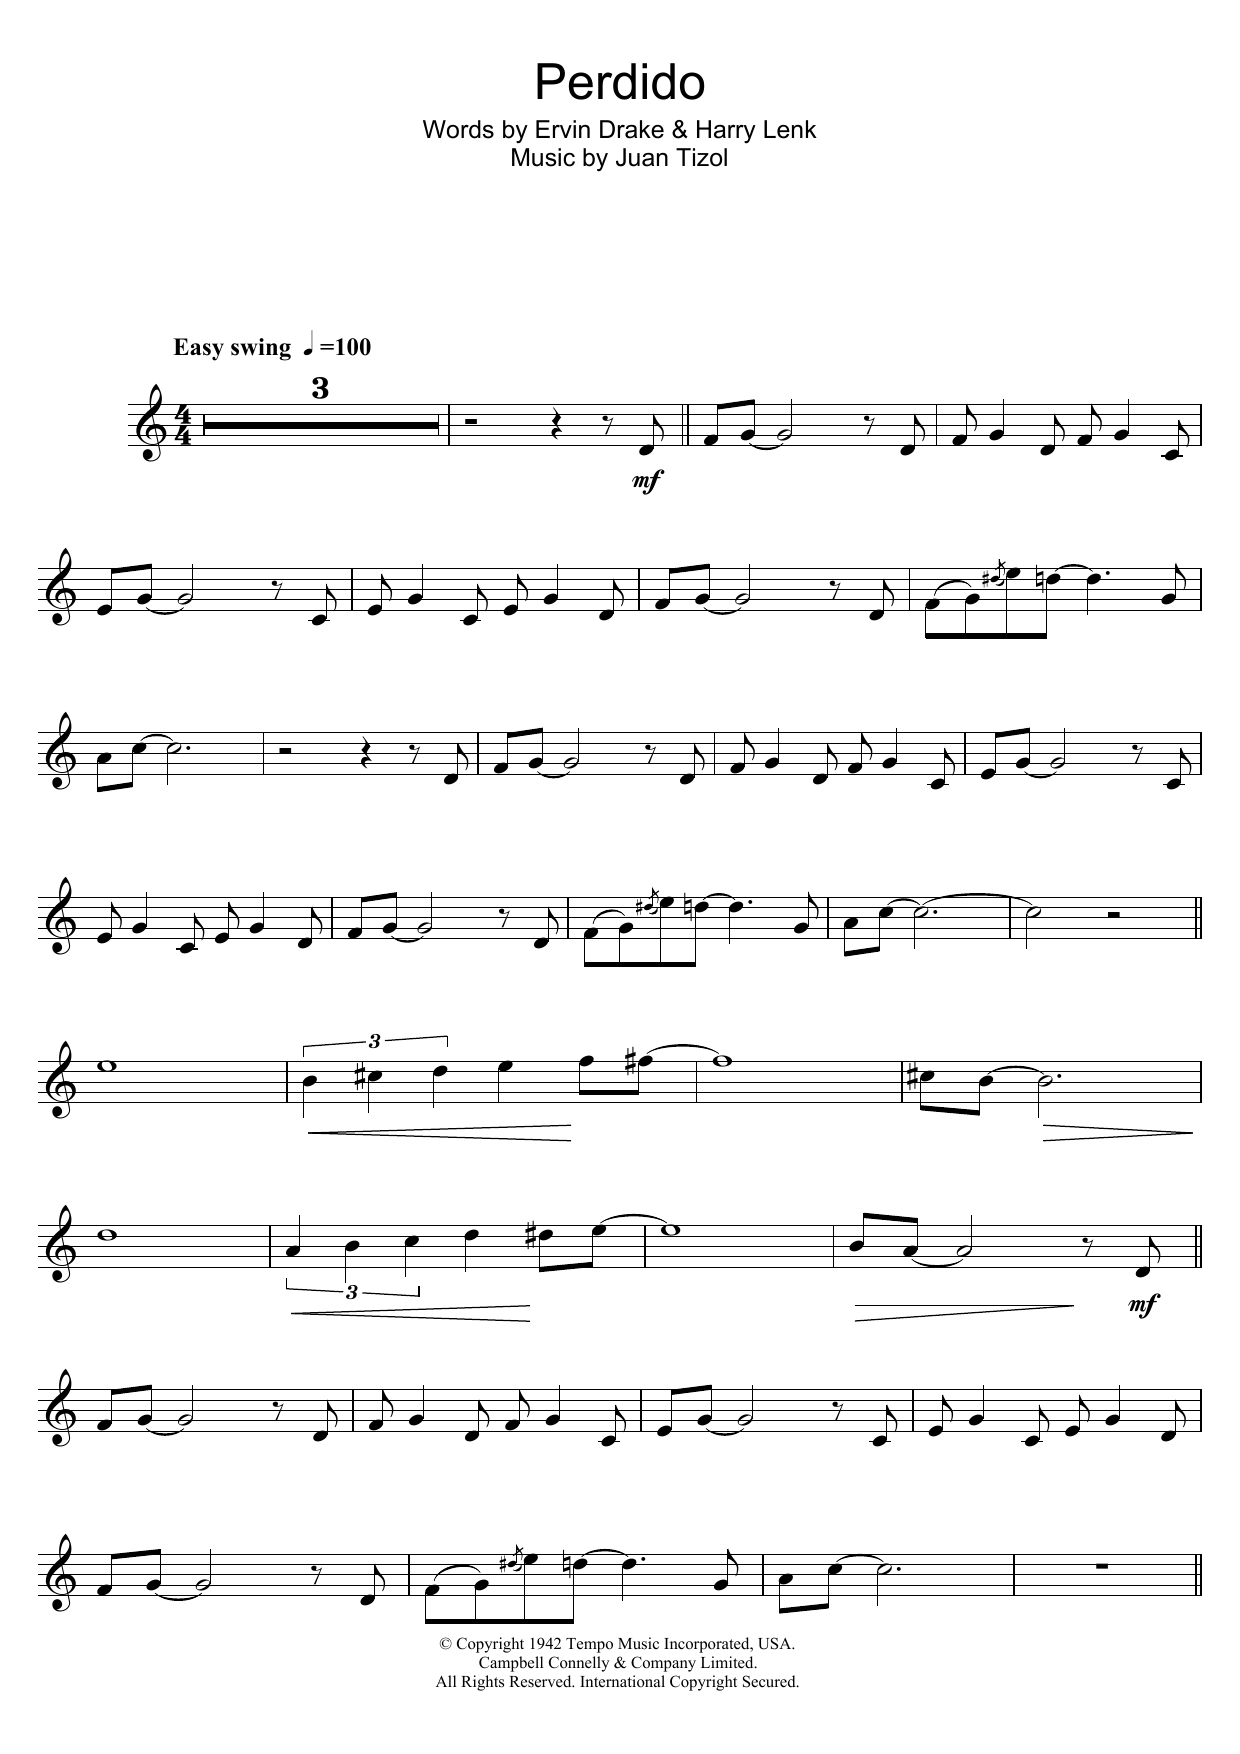 Download Duke Ellington Perdido Sheet Music